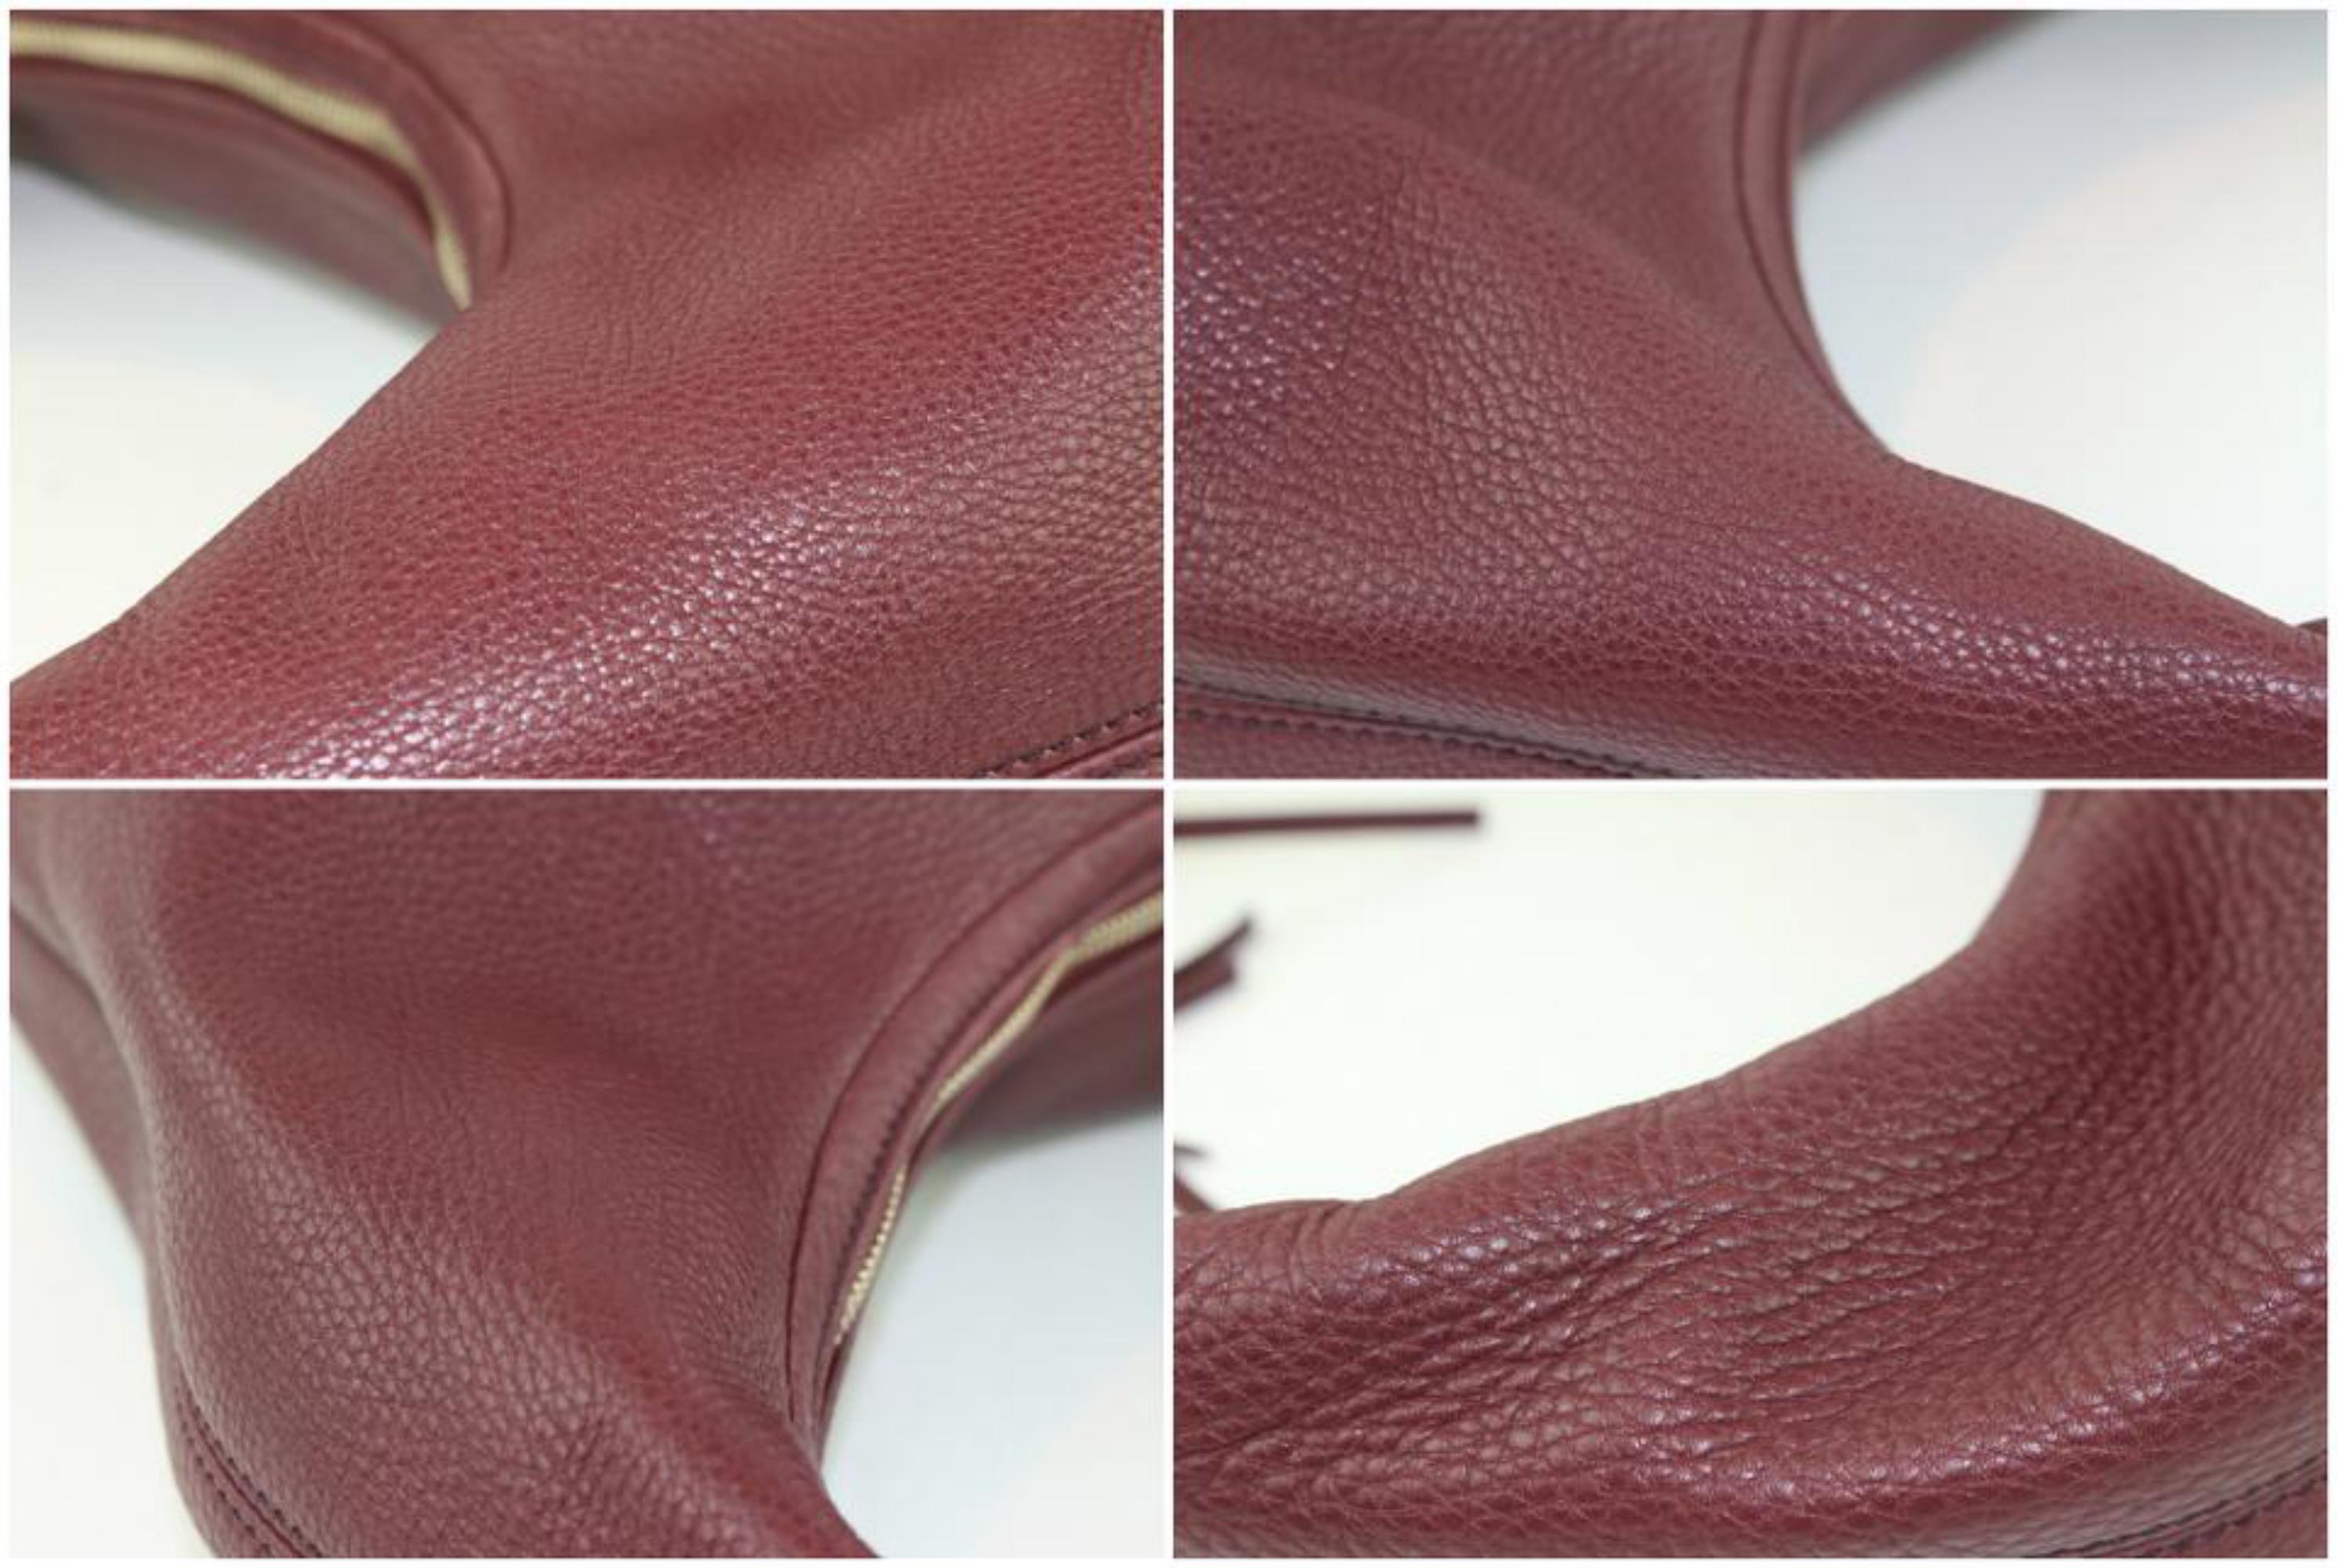 Gucci Soho Large Pebbled Calfskin 17gz1102 Burgundy Leather Hobo Bag For Sale 4